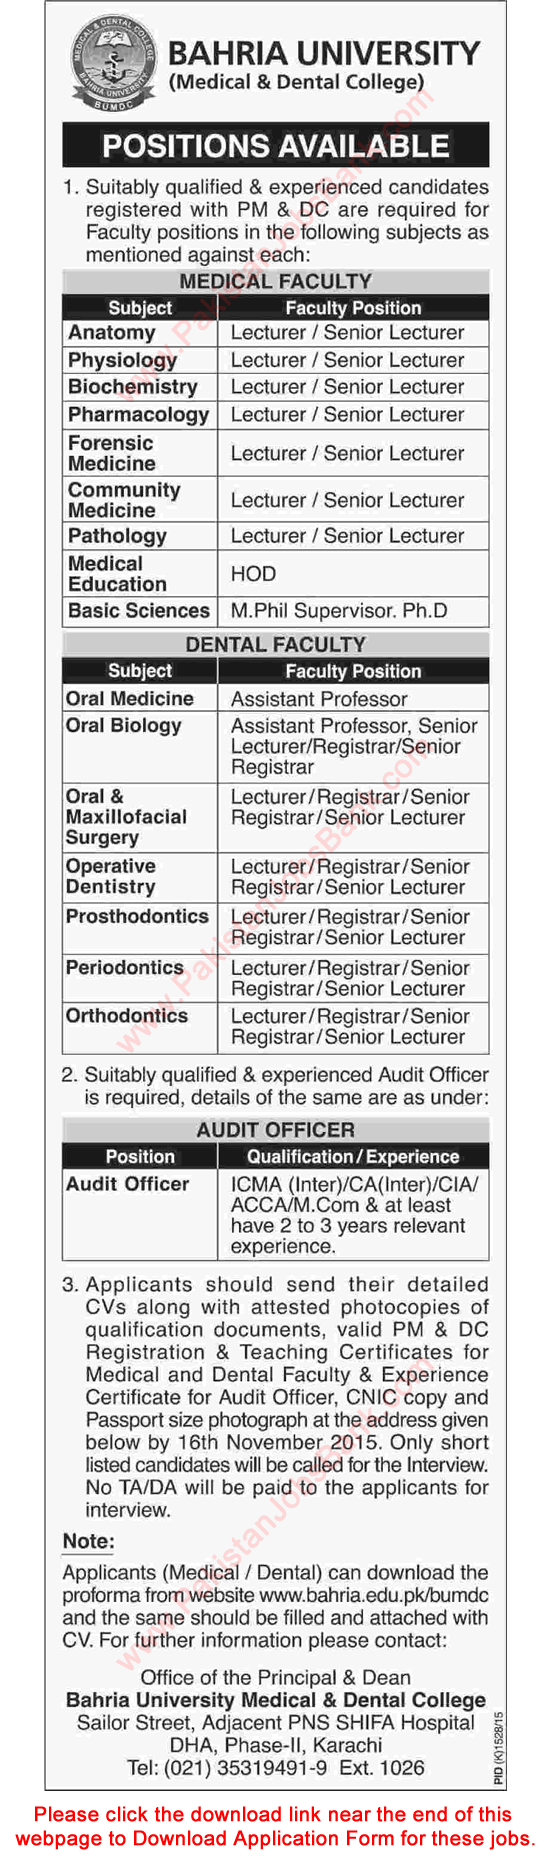 Bahria University Karachi Jobs 2015 November Application Form Medical / Dental Faculty & Audit Officer